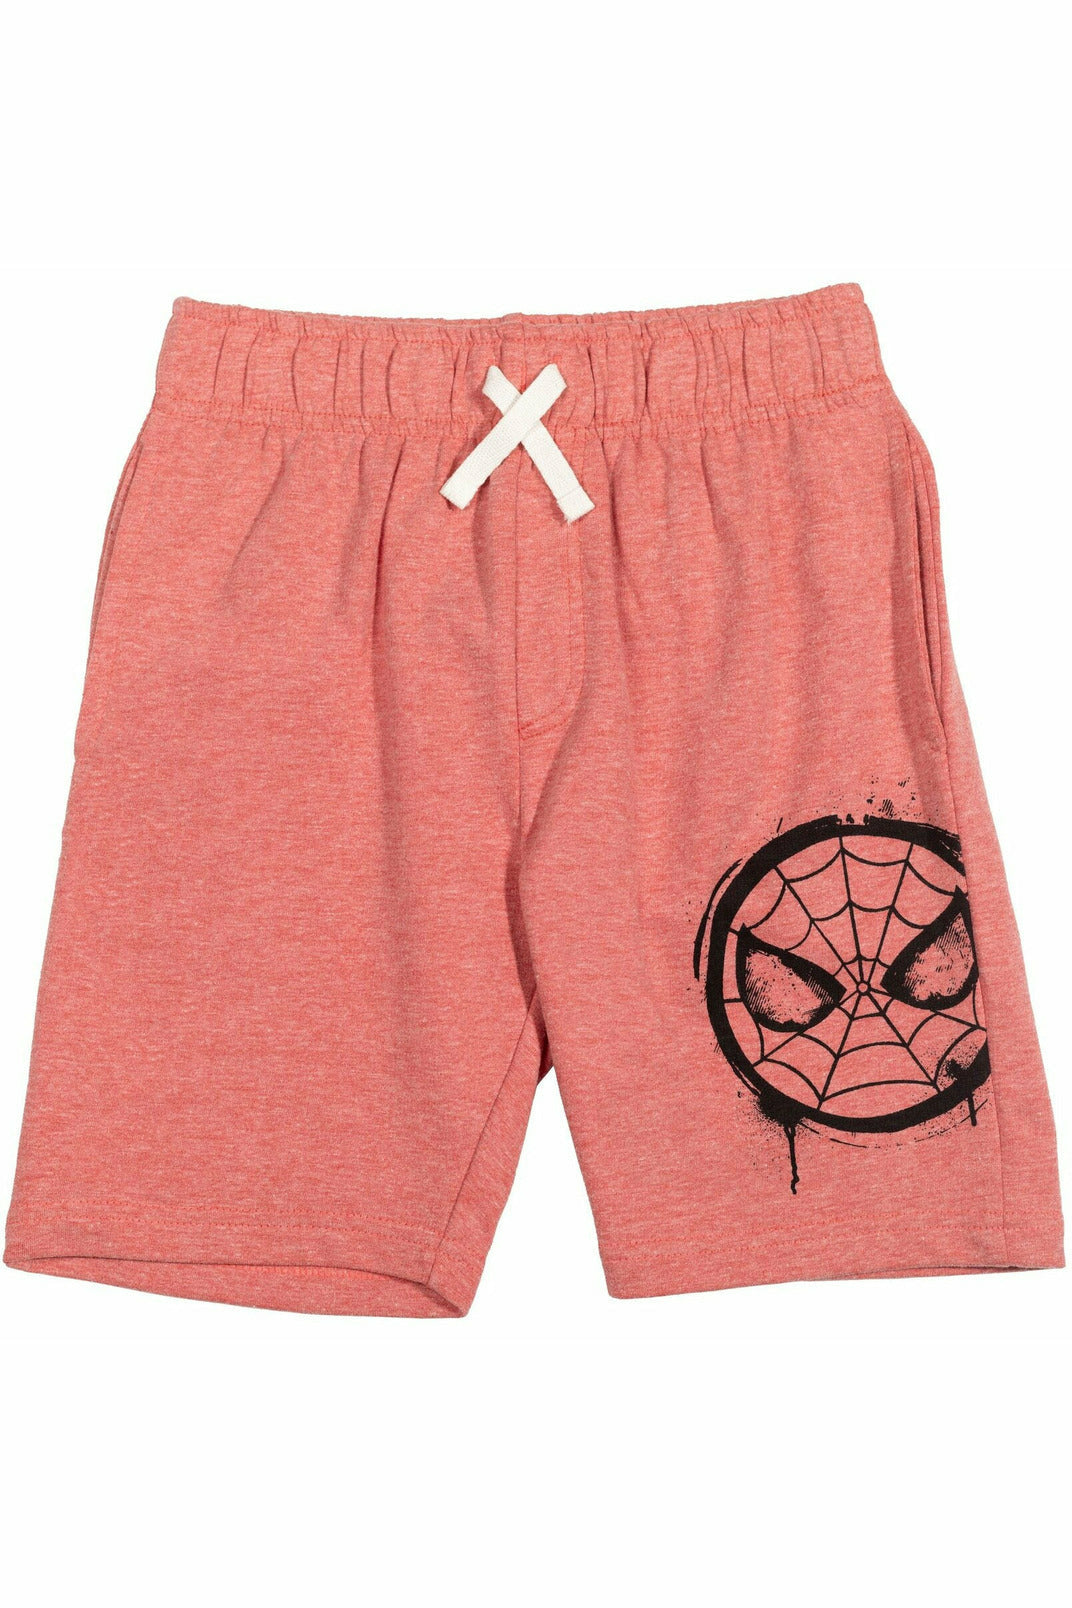 Spider-Man Avengers 2 Pack Shorts